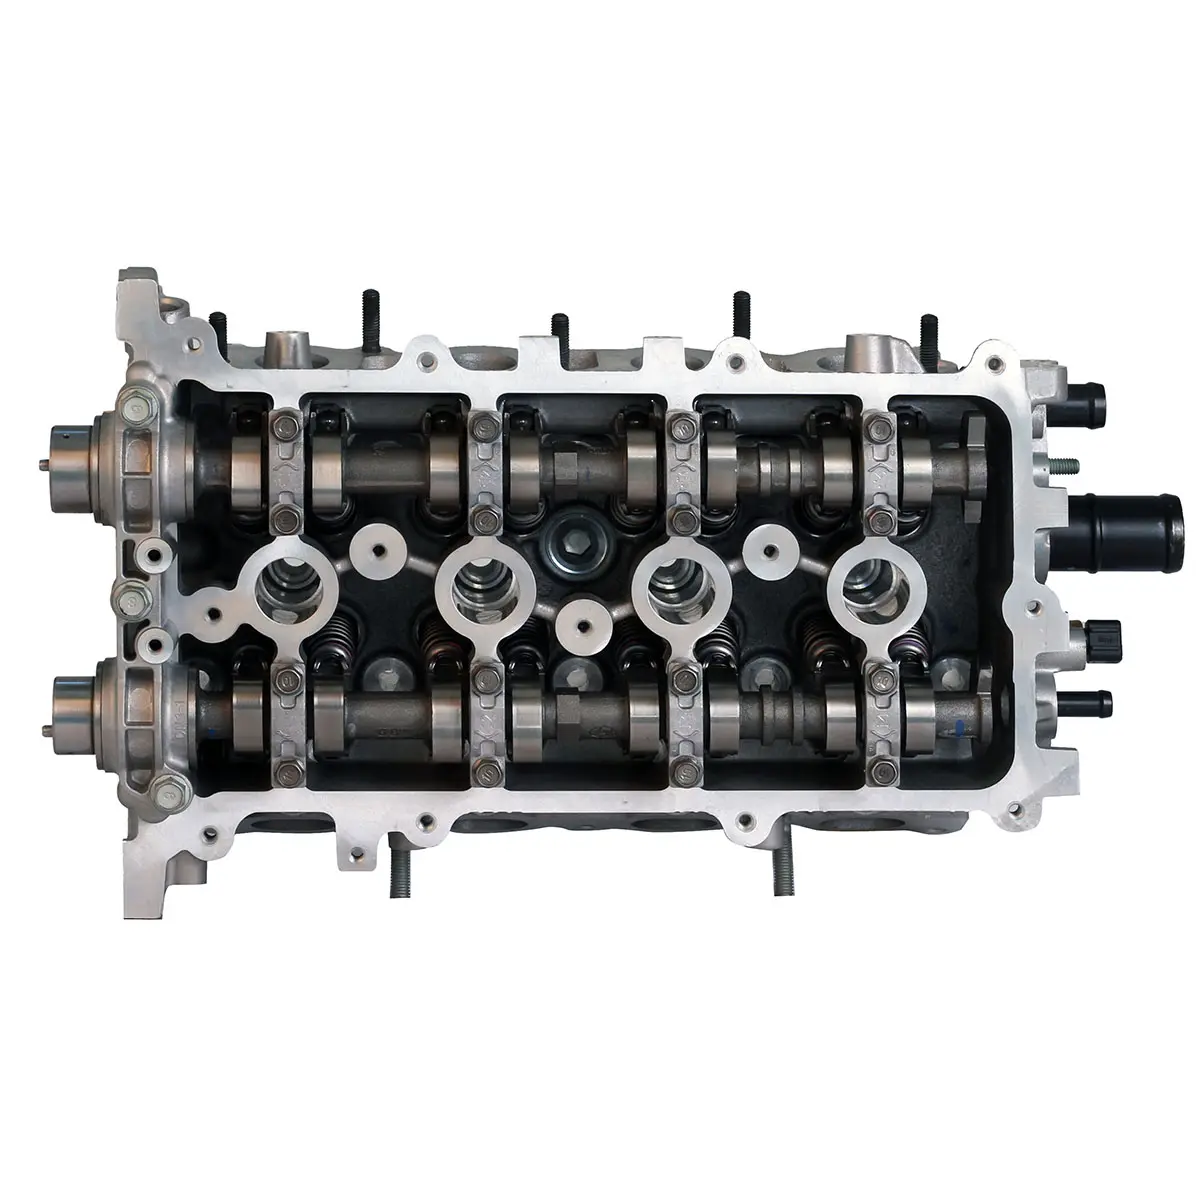 OEM Engine Parts G4LA G4LC 1.2L 1.4L Cylinder Head For Hyundai Renner I10 I20 KIA Rio Picanto Huanchi K2